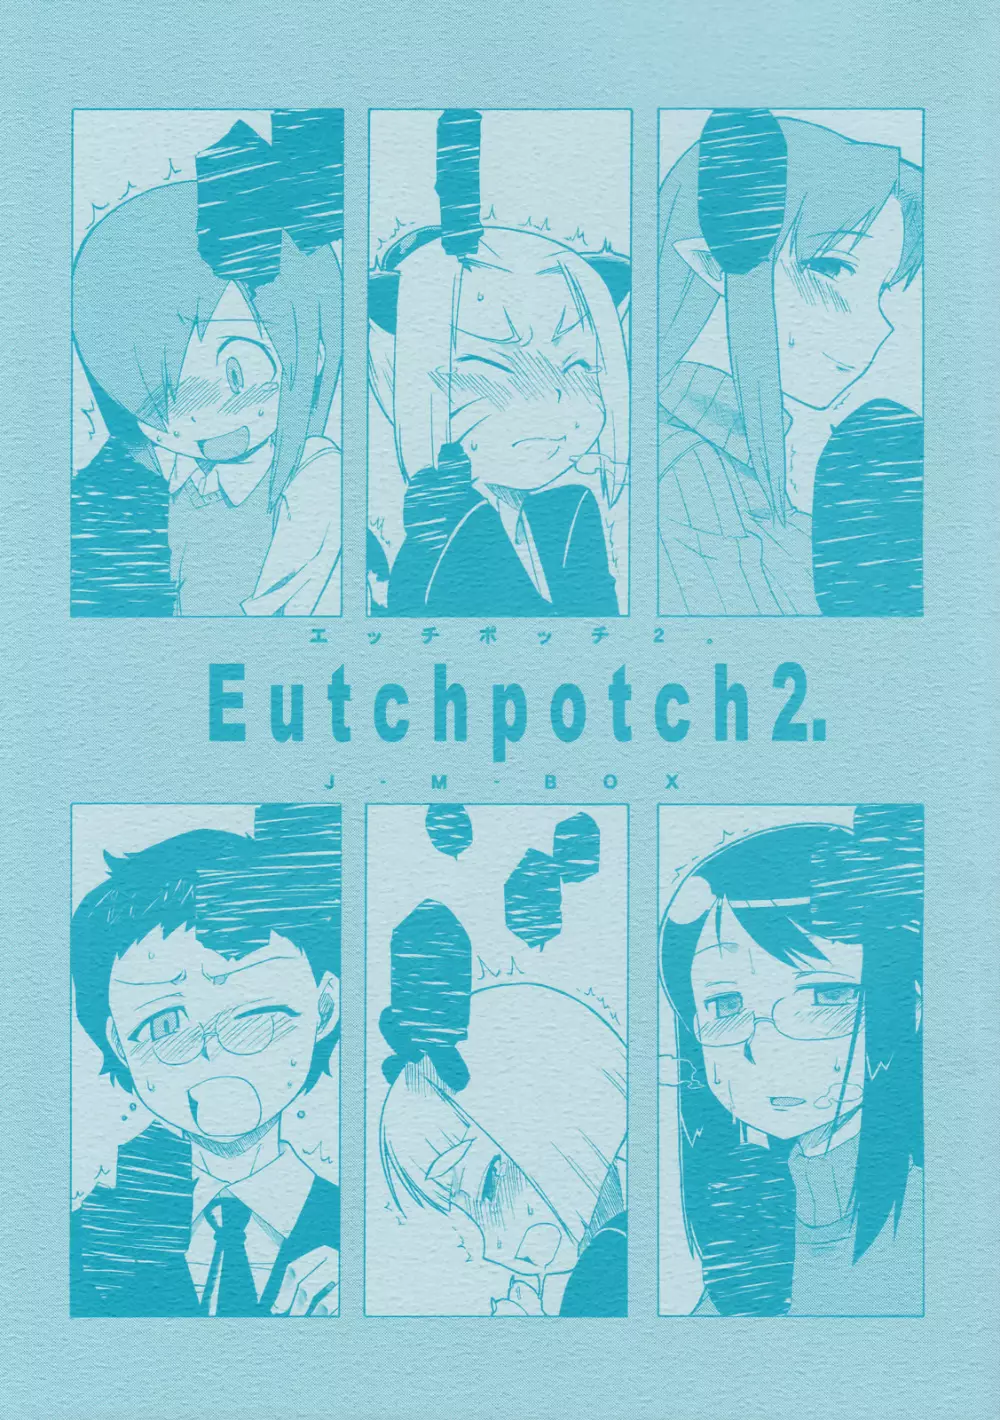 Eutchpotch 2. - page1